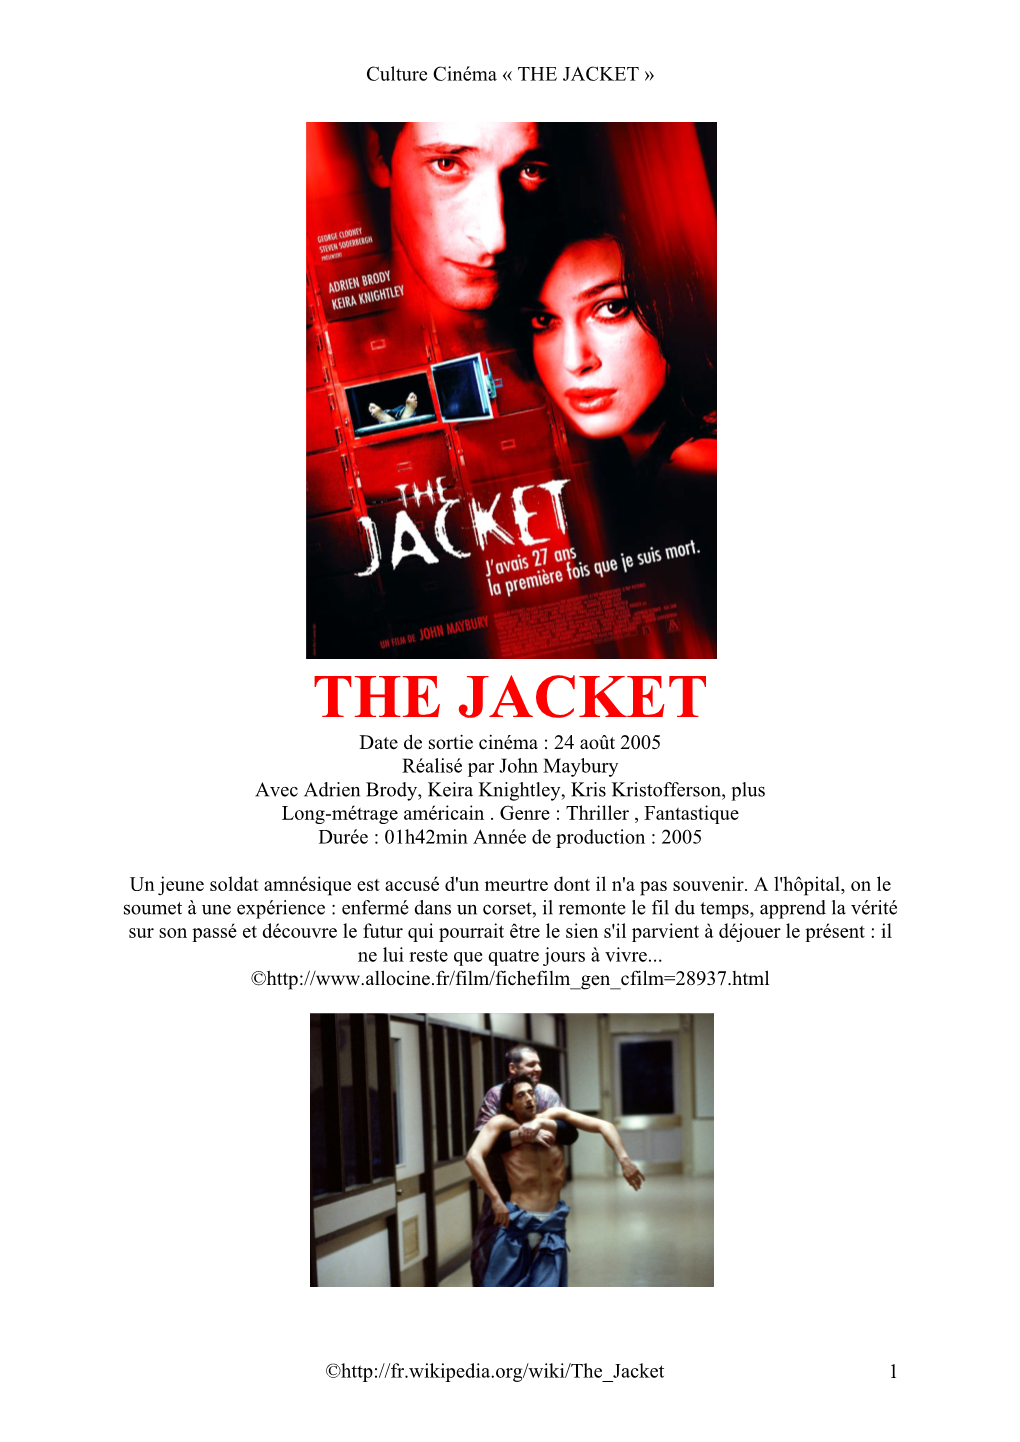 The Jacket »